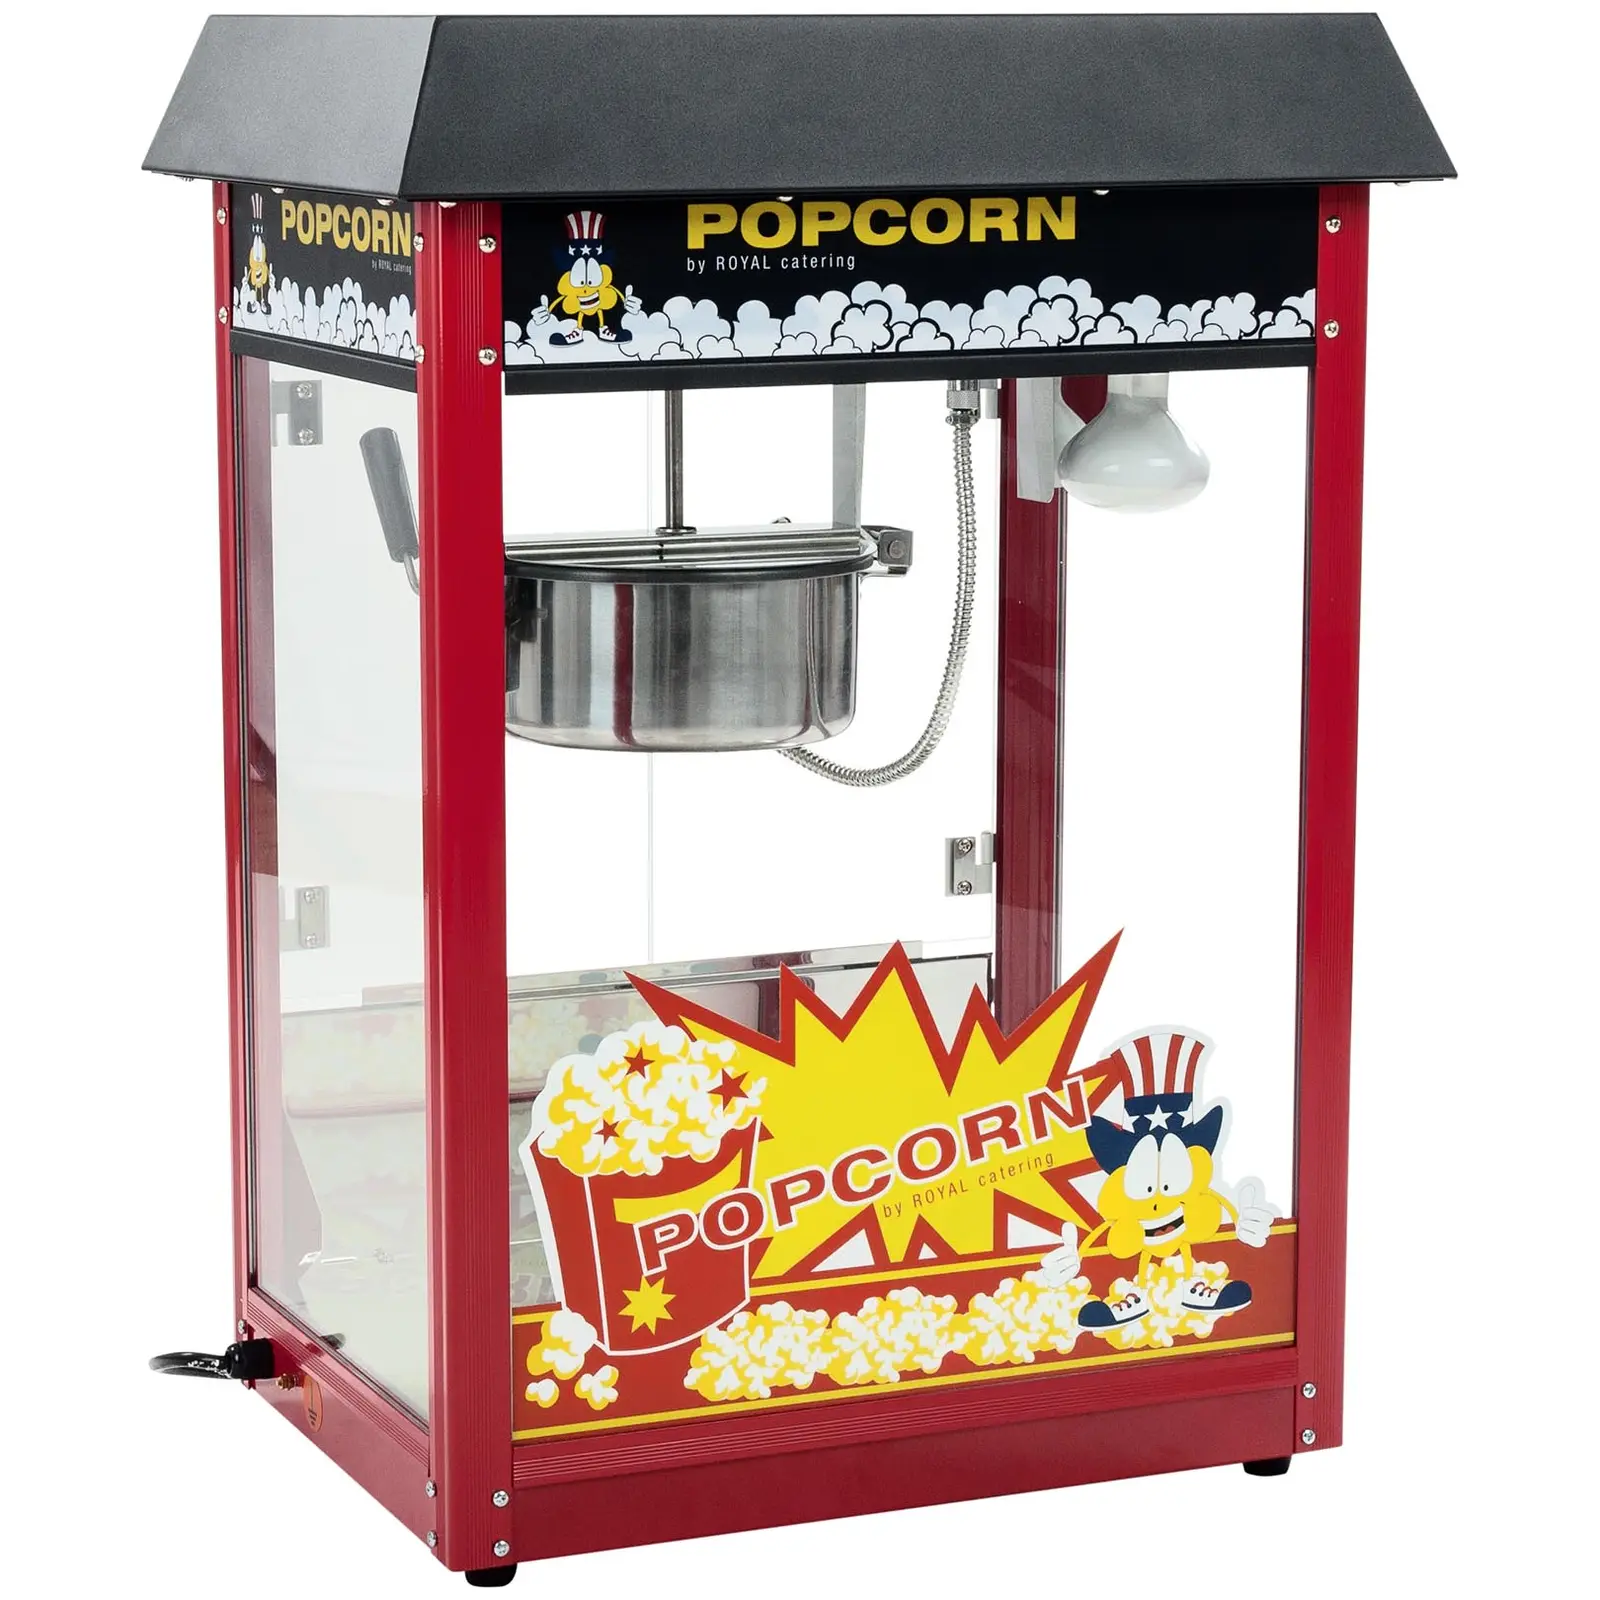 Popcorn machine - Black Roof